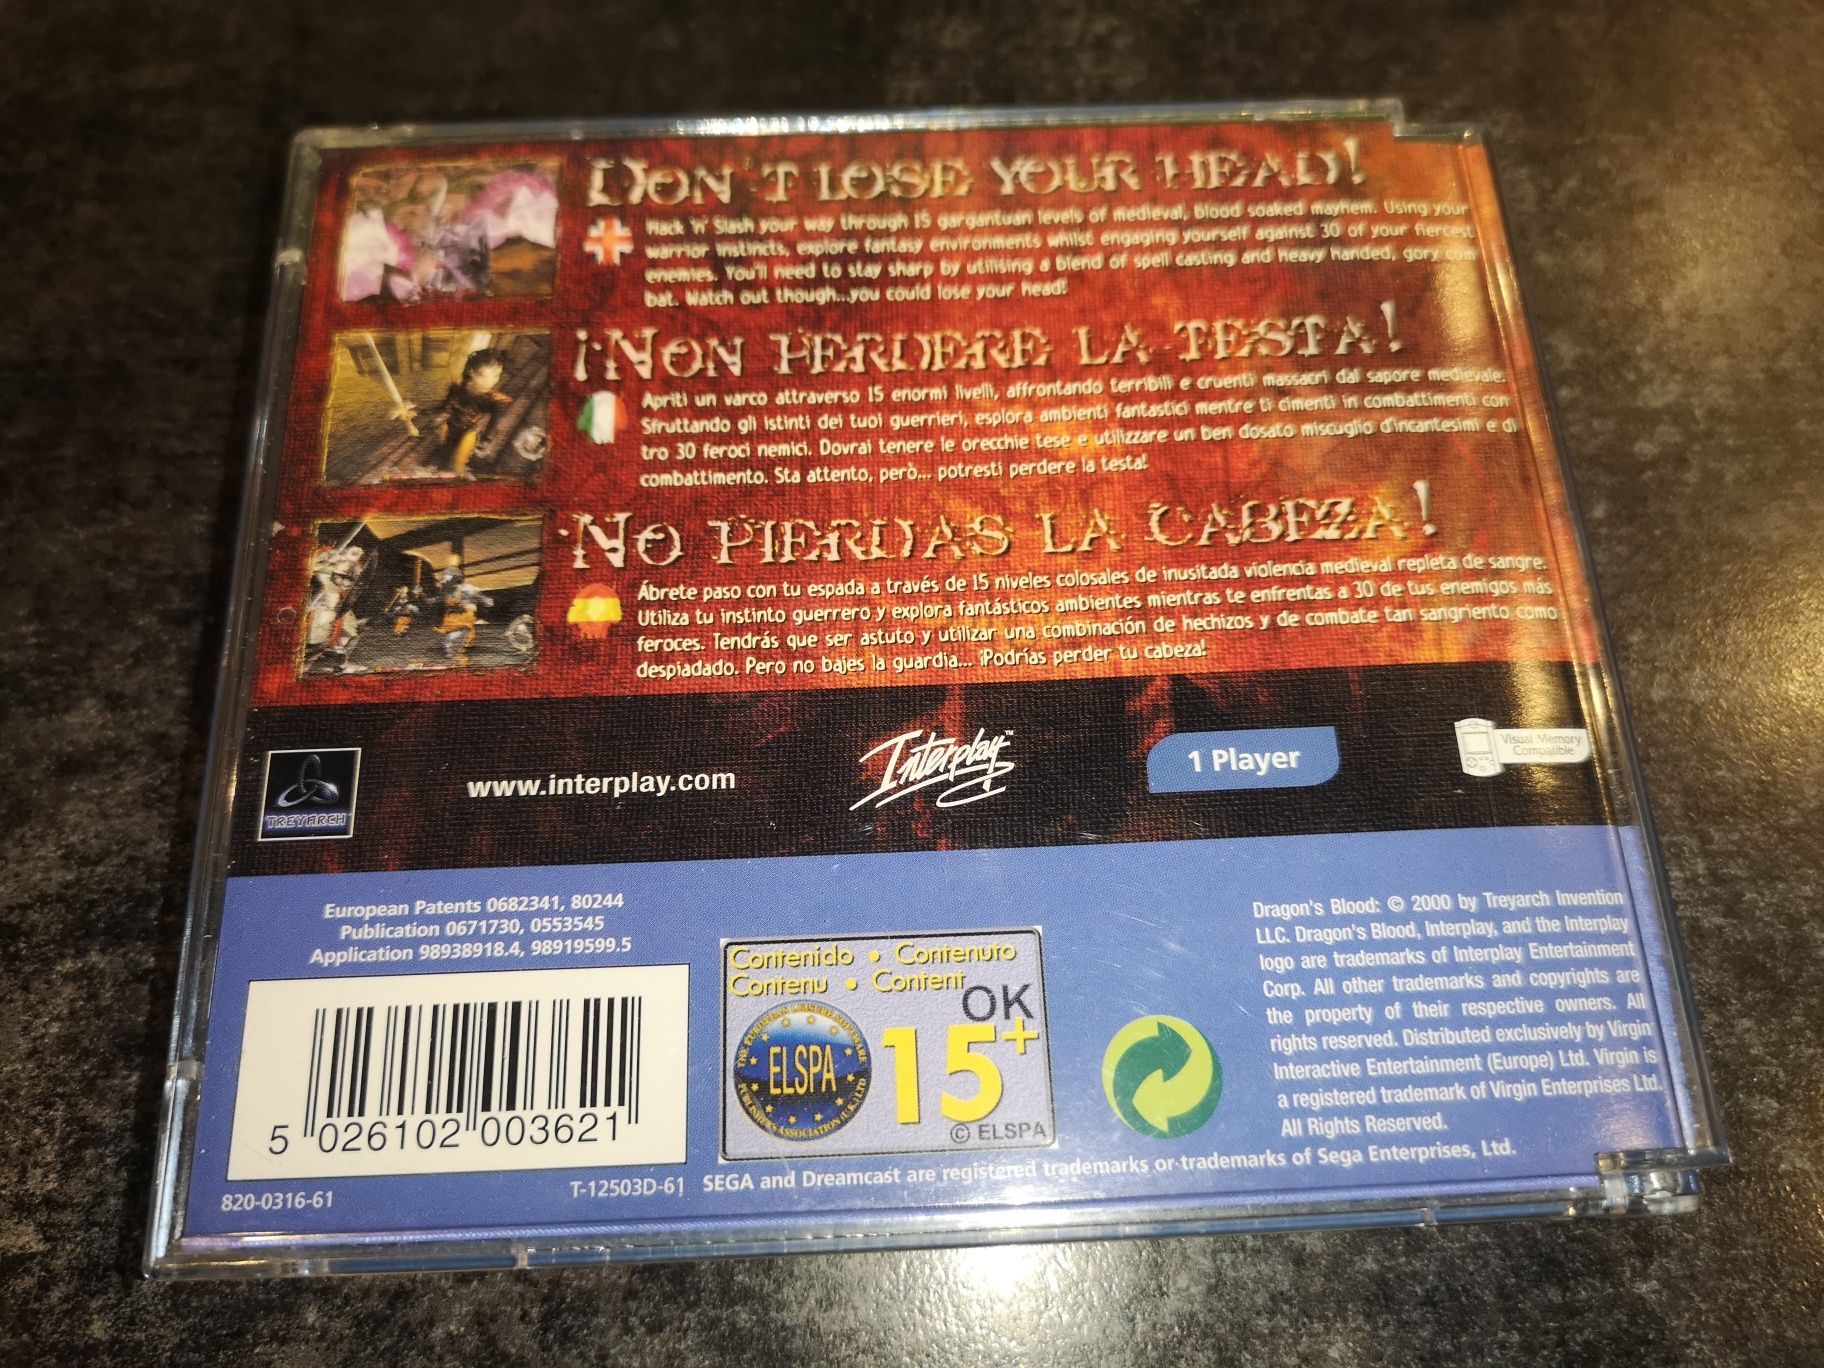 Dragons Blood DREAMCAST Sega gra ANG (stan całości BDB+) kioskzgrami